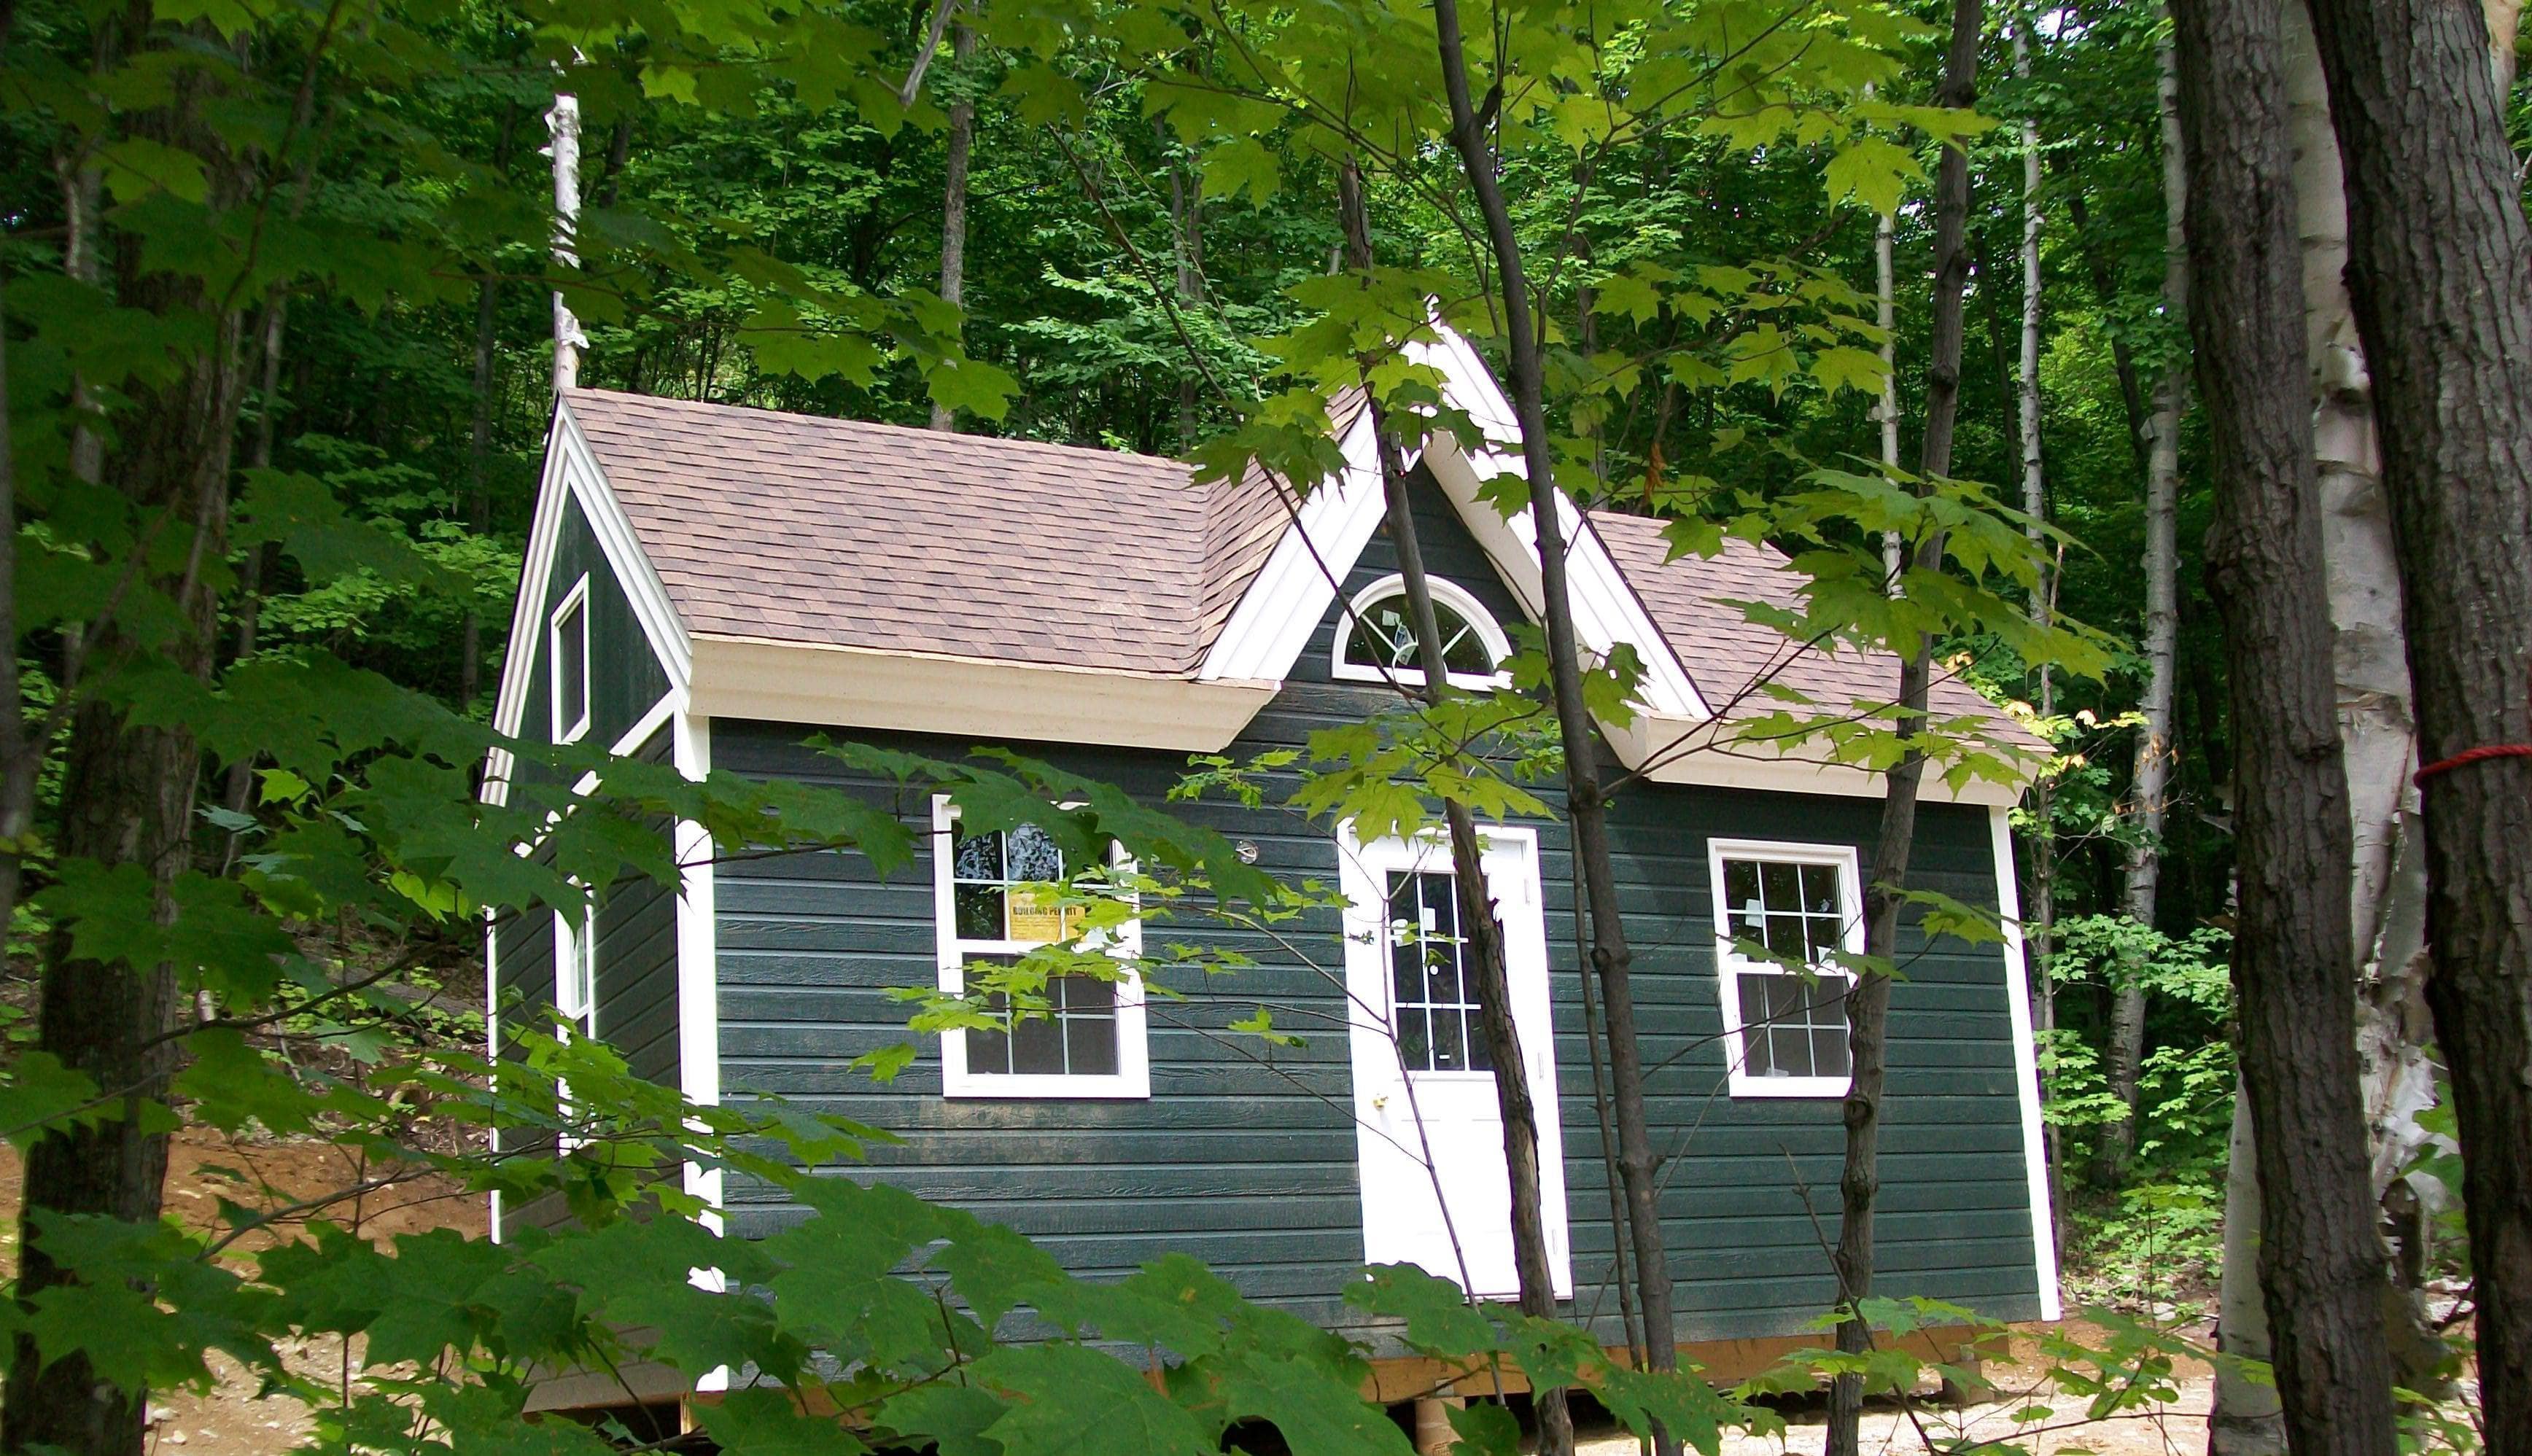 Breckenbridge 12x22 cabin with single hung window in Elliot lake Ontario. ID number 90203-1